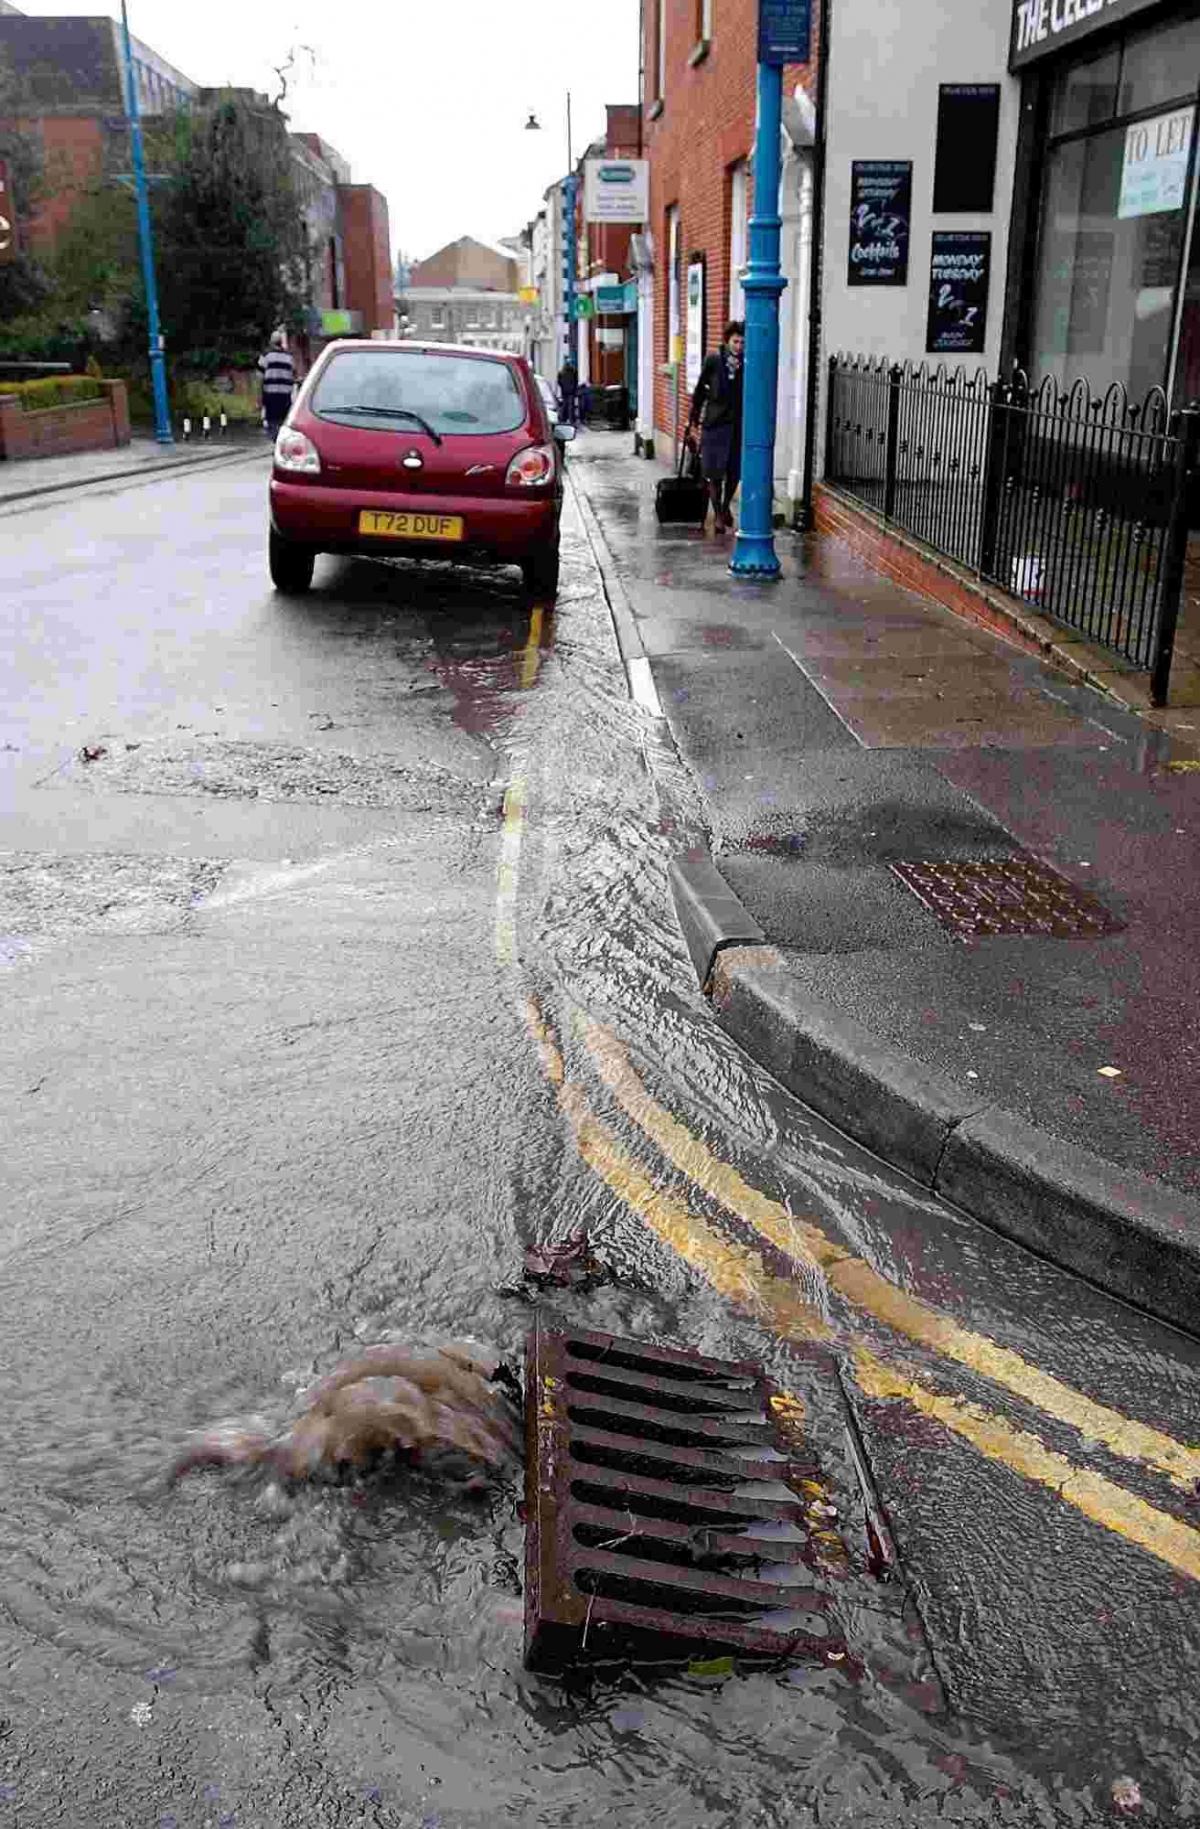 London Streets drains struggle to cope after heavy rain on Thursday 10 January 2007